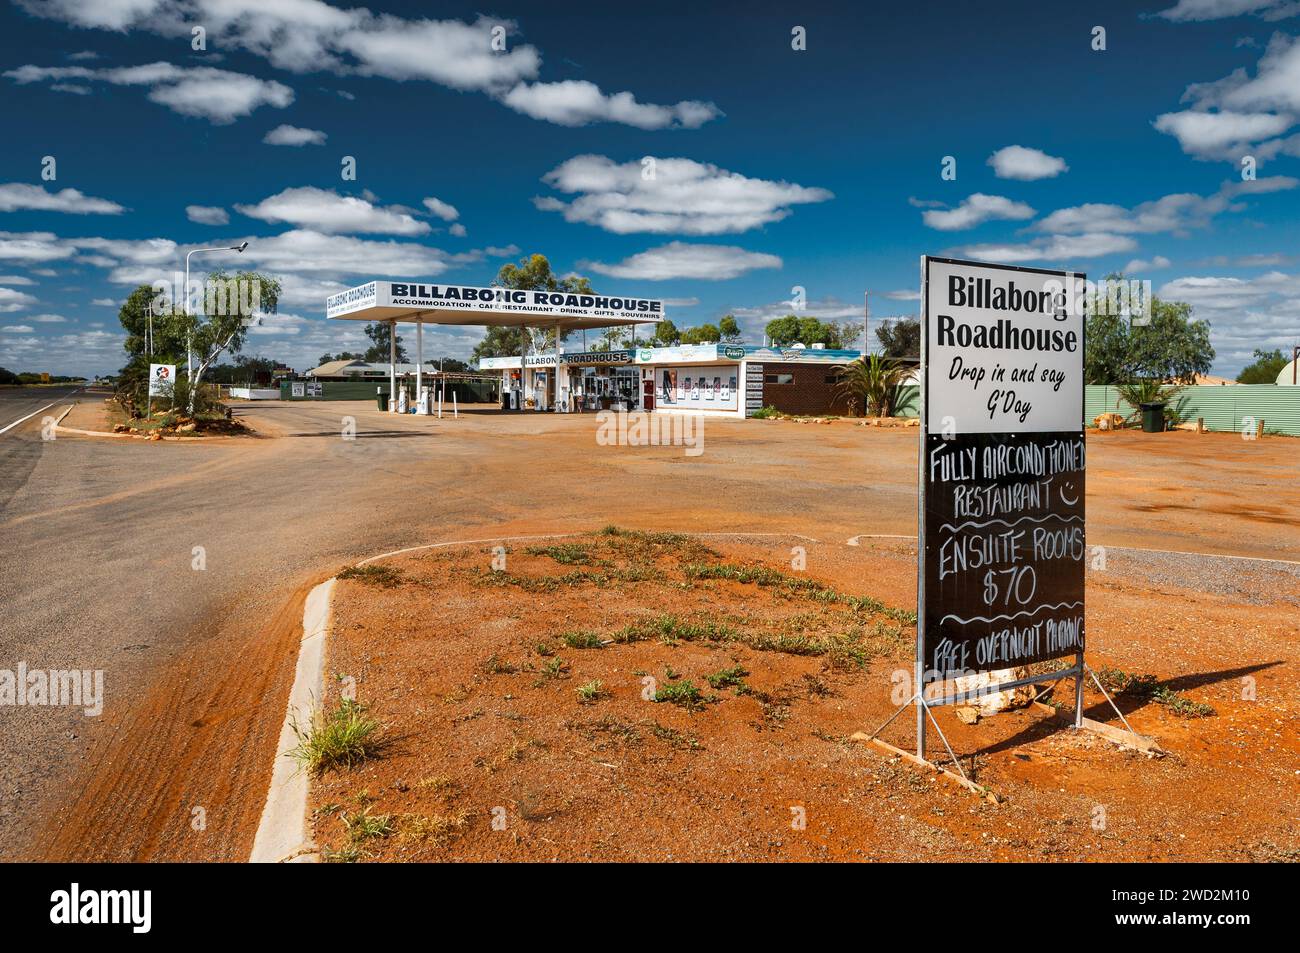 Famosa Billabong Roadhouse sulla Northwest Coastal Highway, nell'Outback dell'Australia Occidentale. Foto Stock